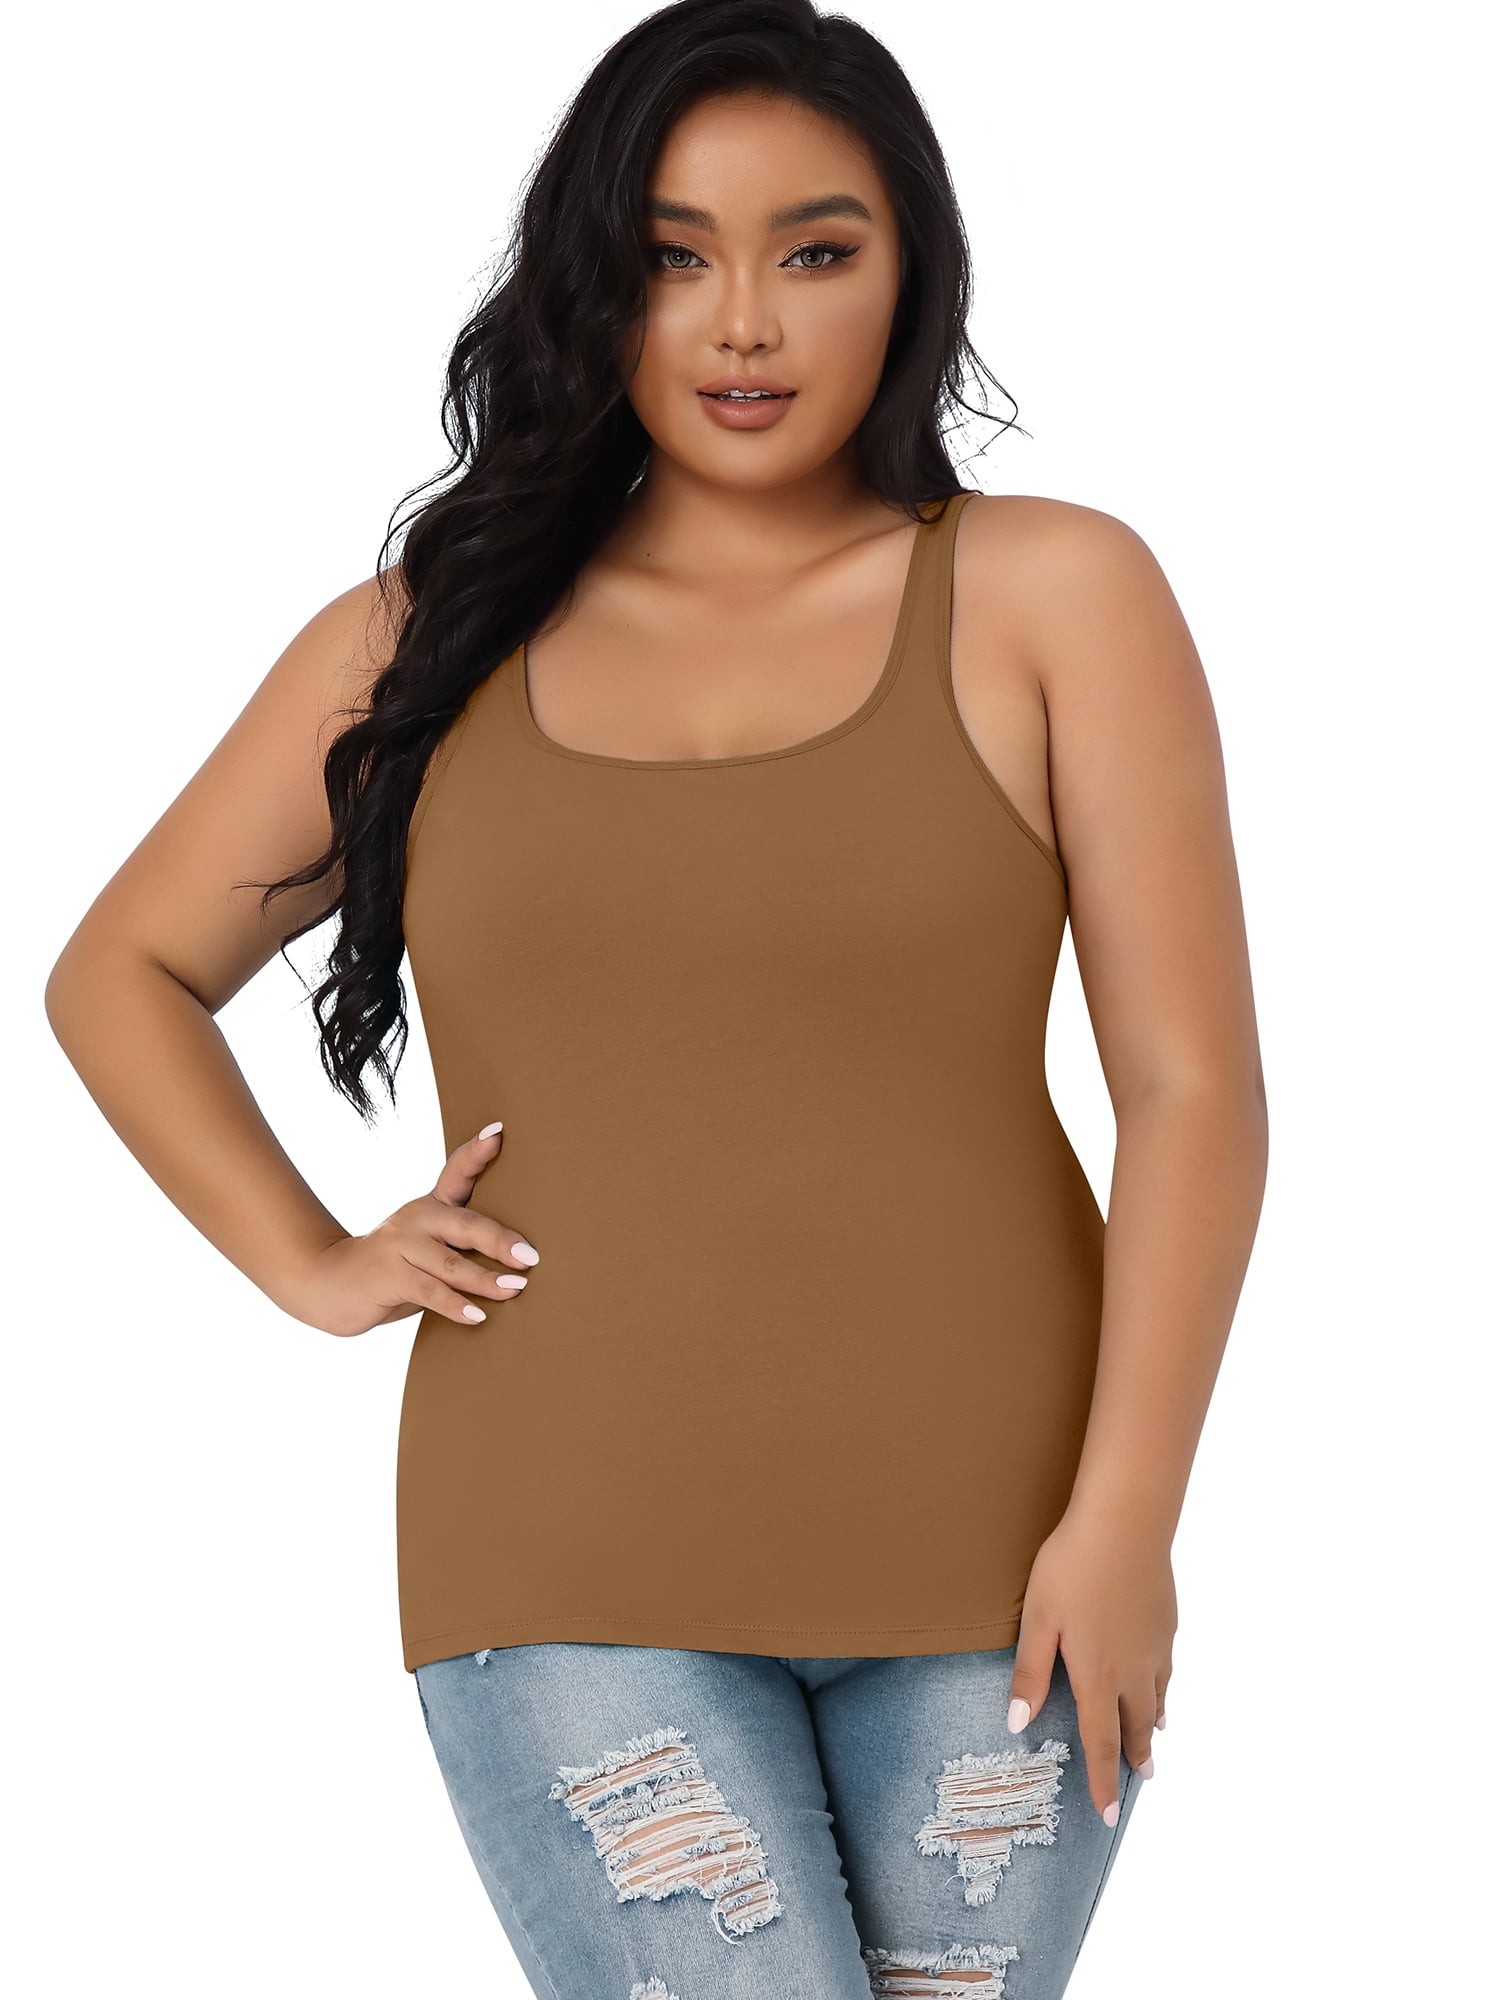 Womens Plus Size Tank Tops & Sleeveless Shirts.